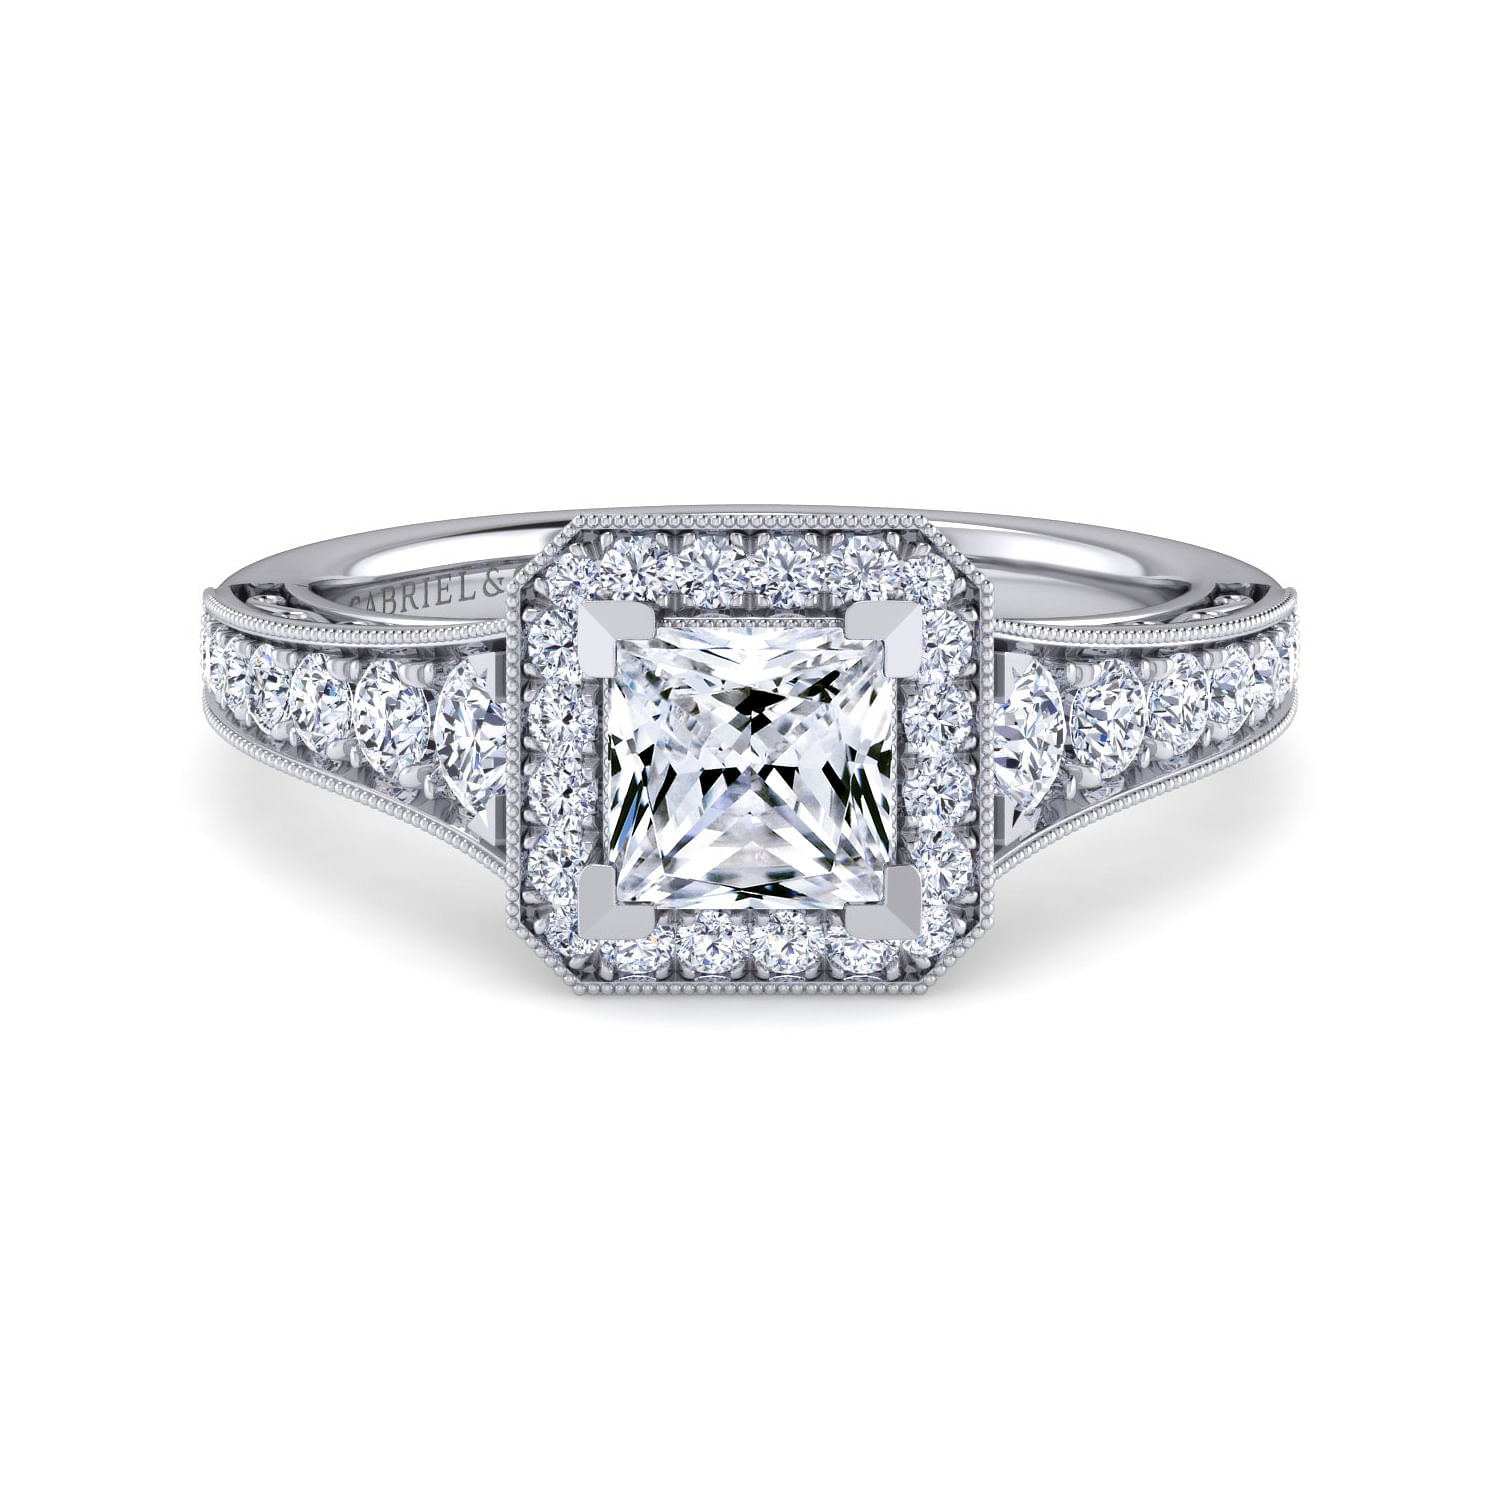 Florence - Vintage Inspired 14K White Gold Princess Halo Diamond Engagement Ring